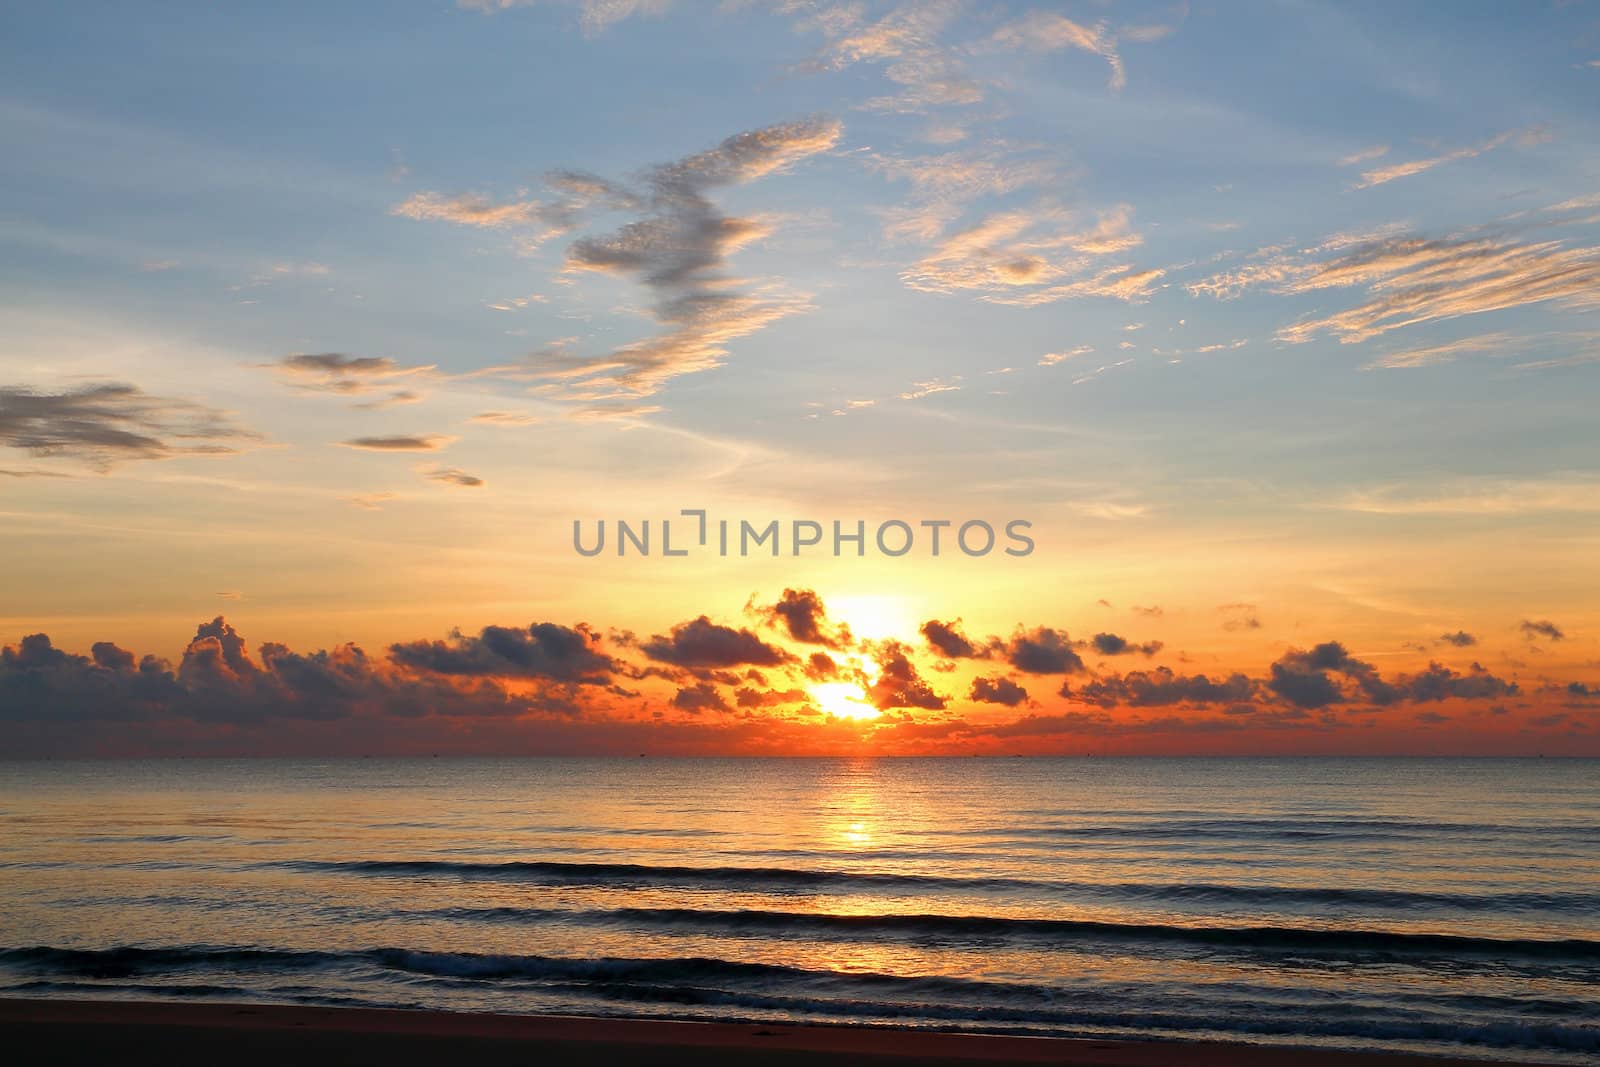 Sunrise at the beach in Thailand